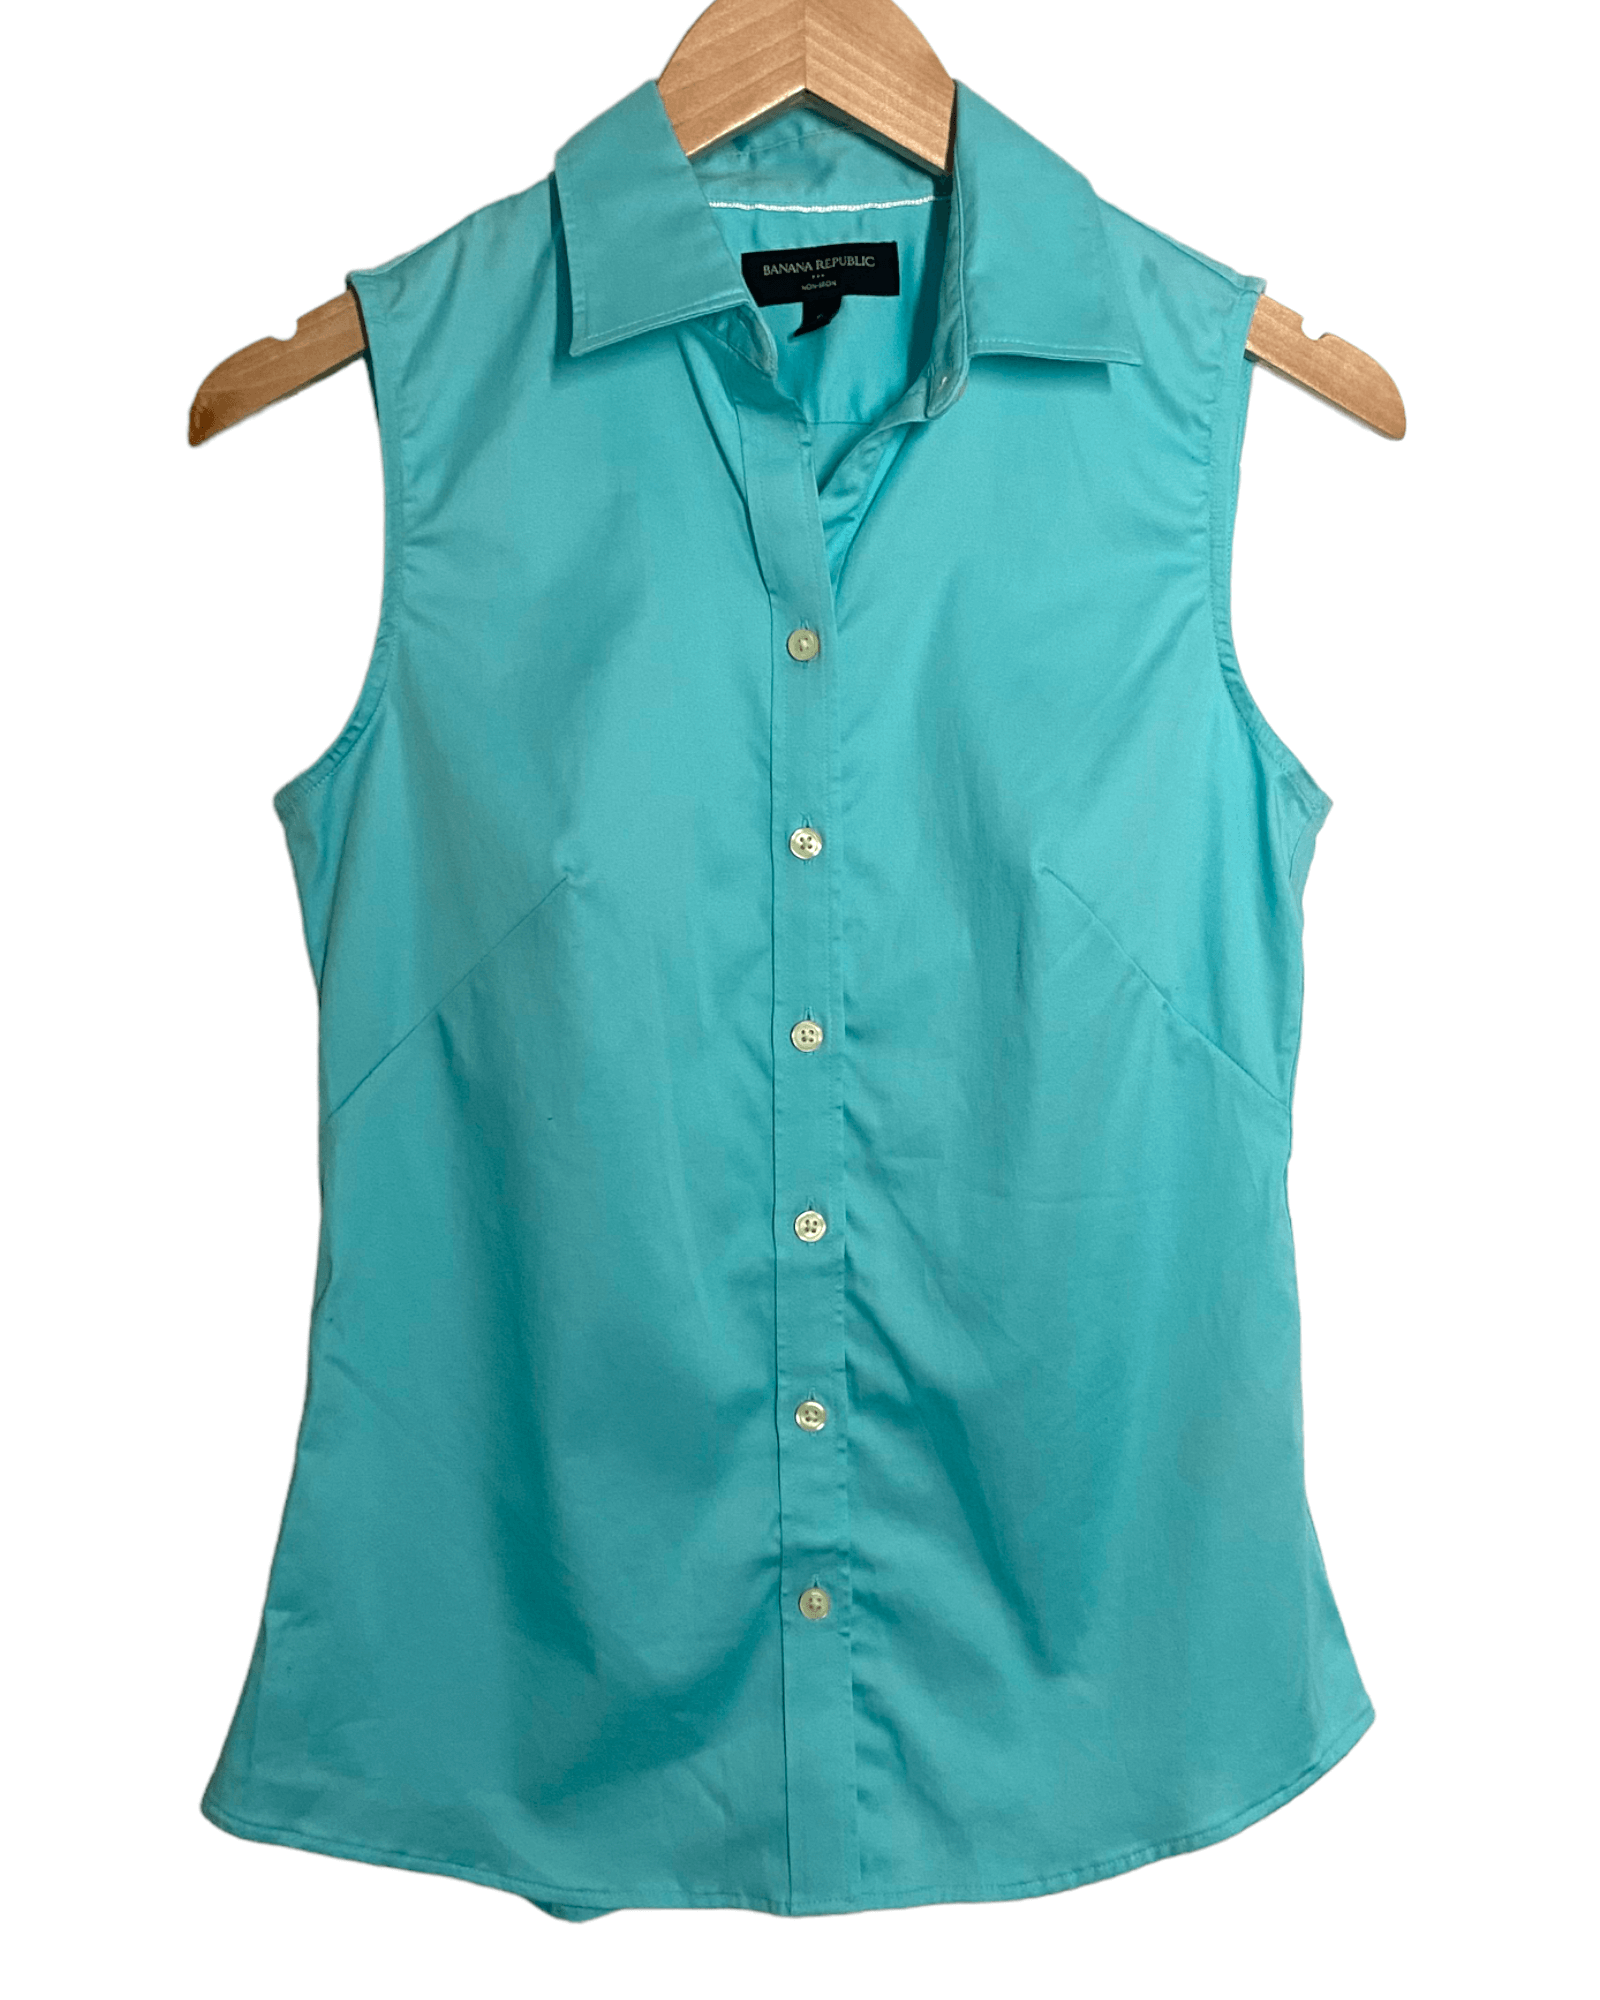 Cool Summer BANANA REPUBLIC non-iron aqua splash sleeveless shirt